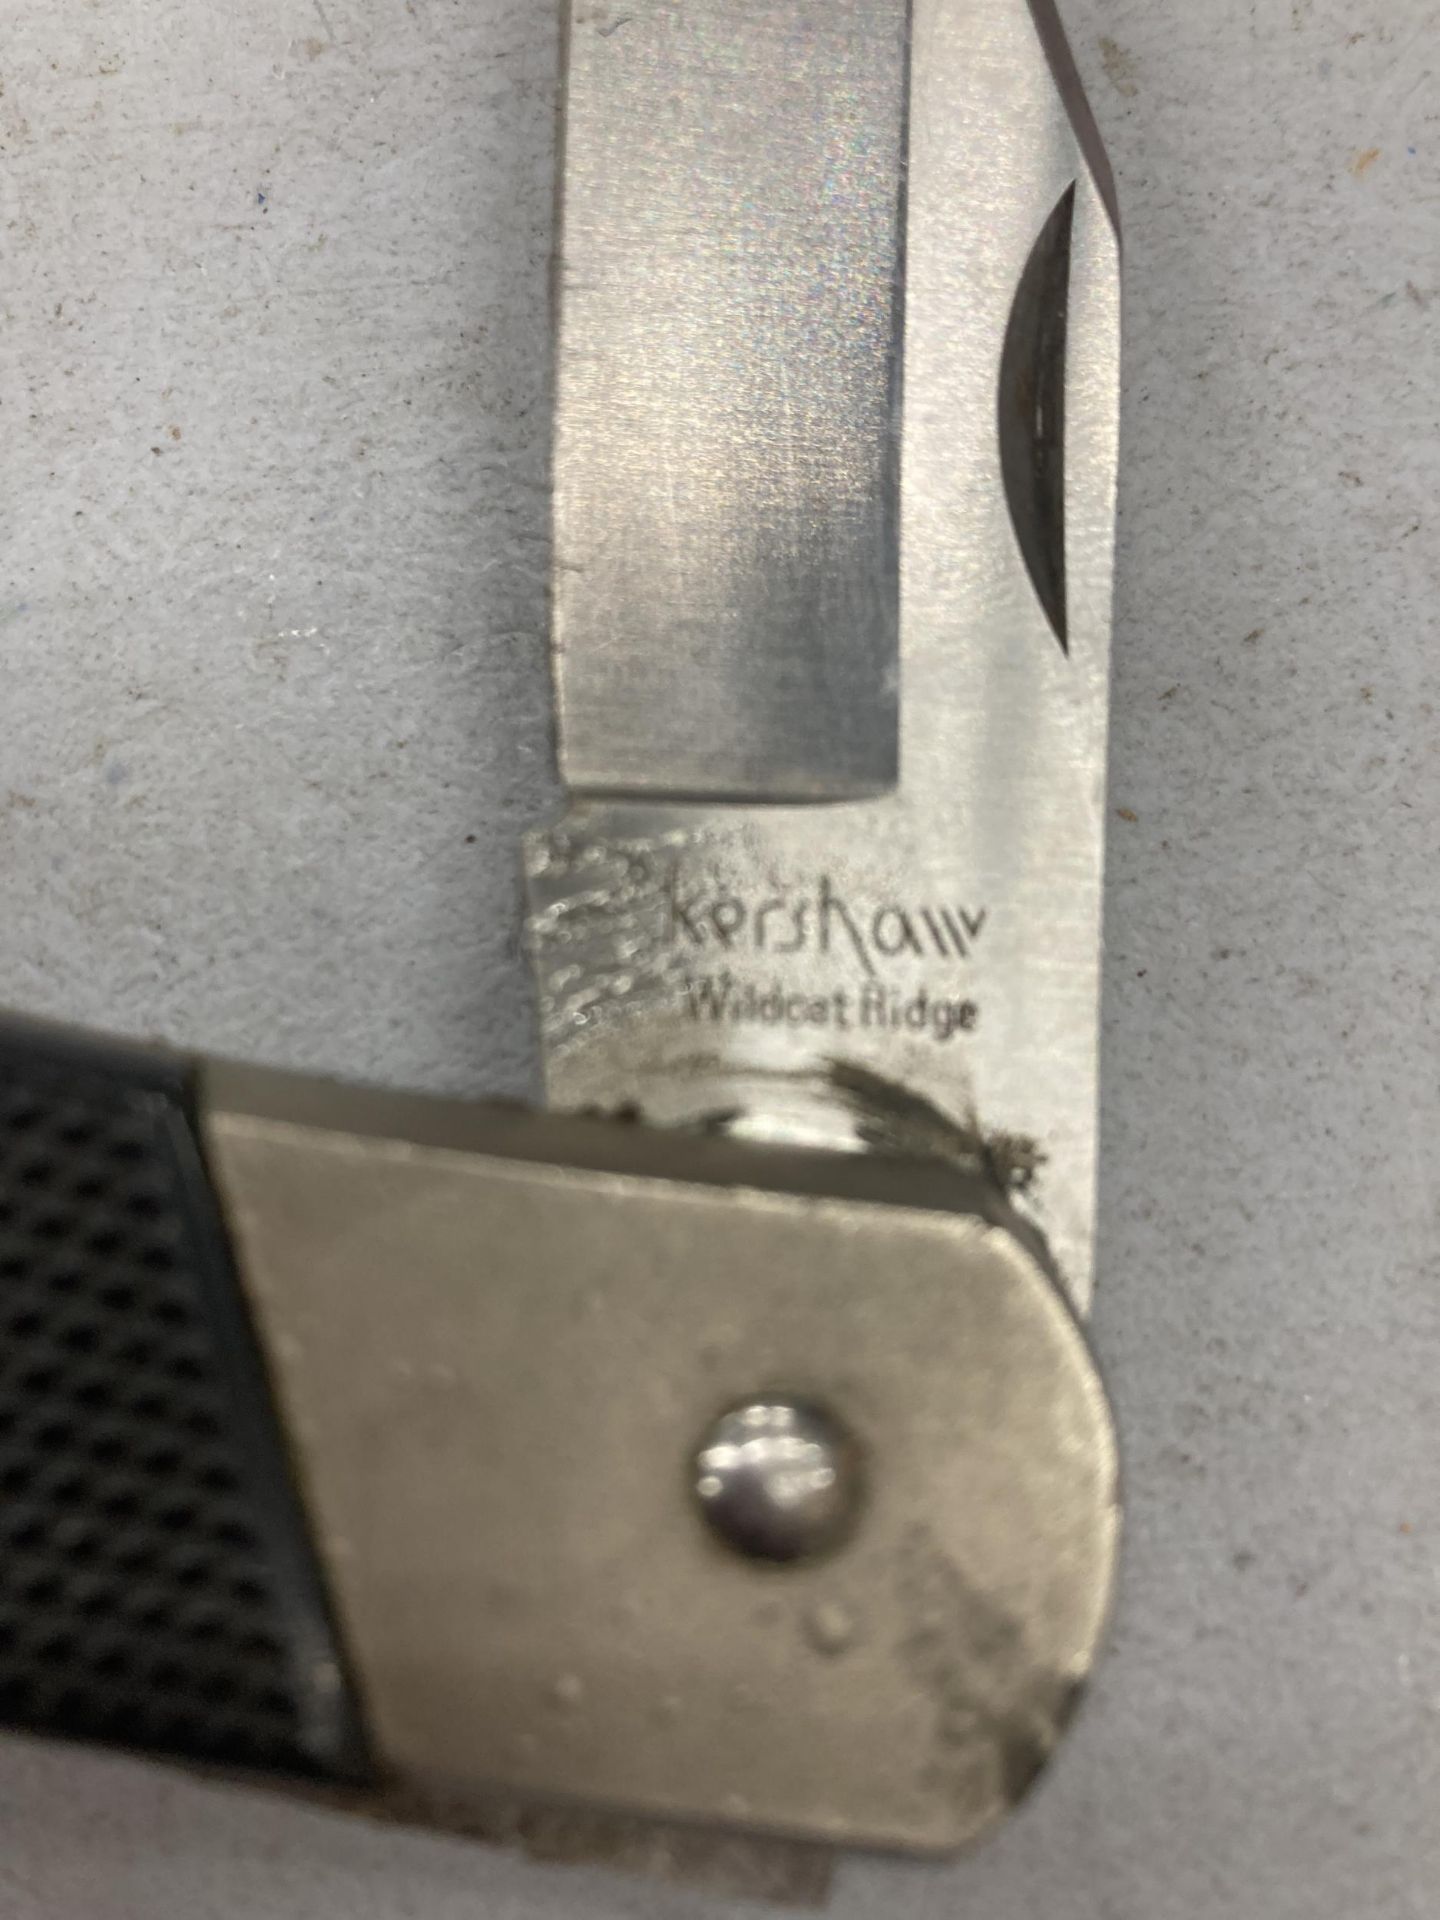 A KERSHAW-WILDCAT RIDGE FOLDING KNIFE - Image 3 of 3